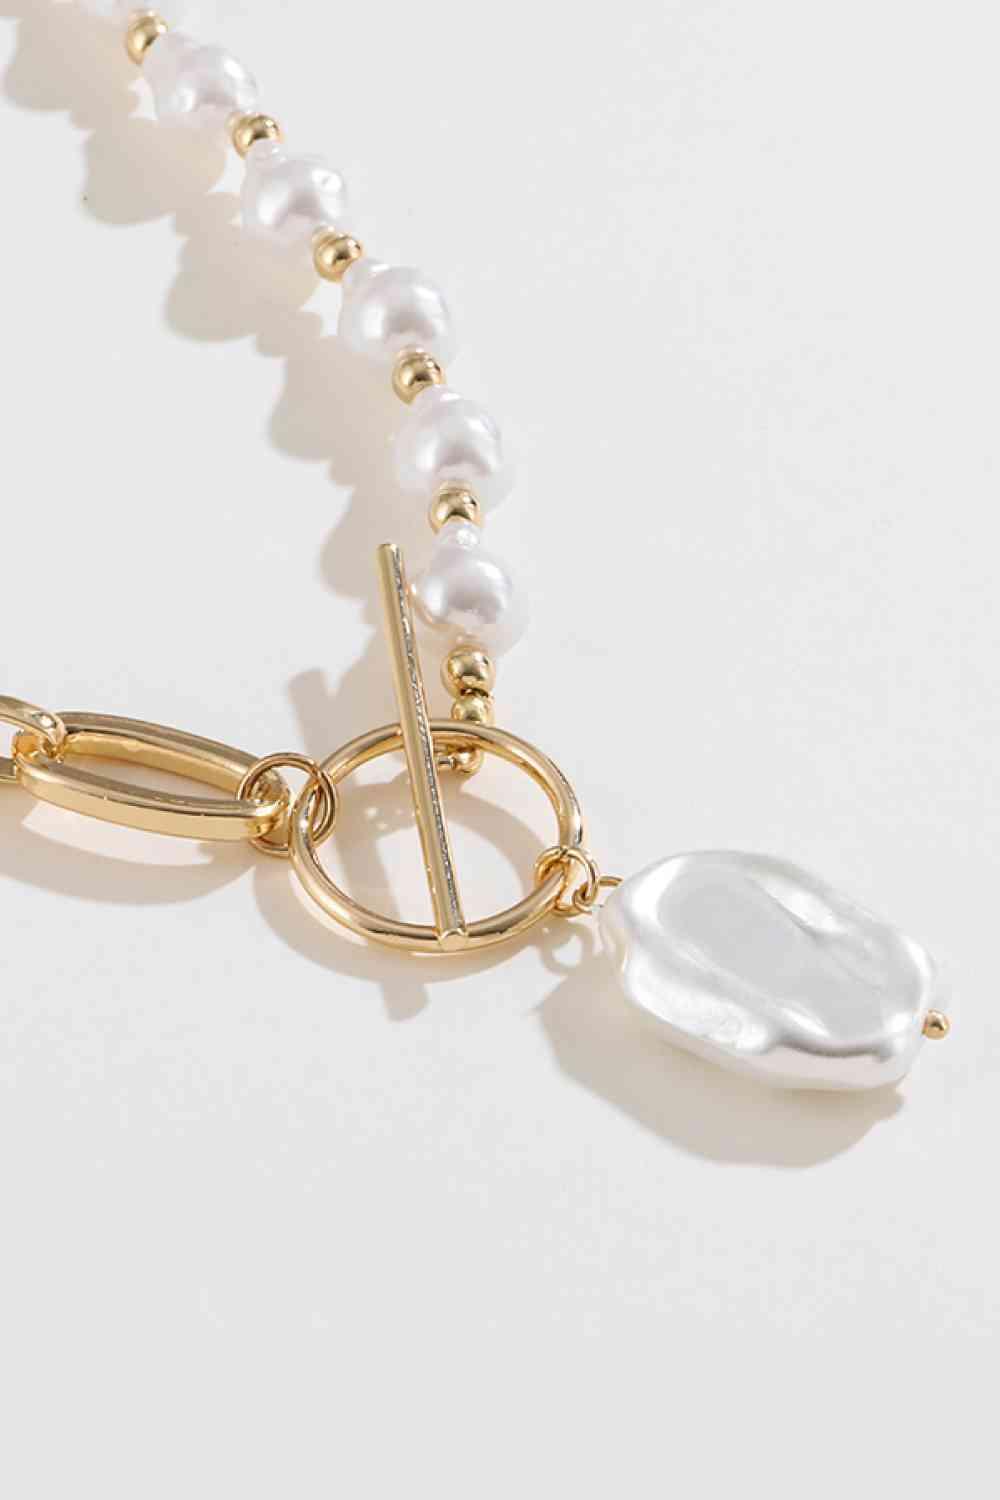 Half Pearl Half Chain Toggle Clasp Necklace - Shop SWR Luxe